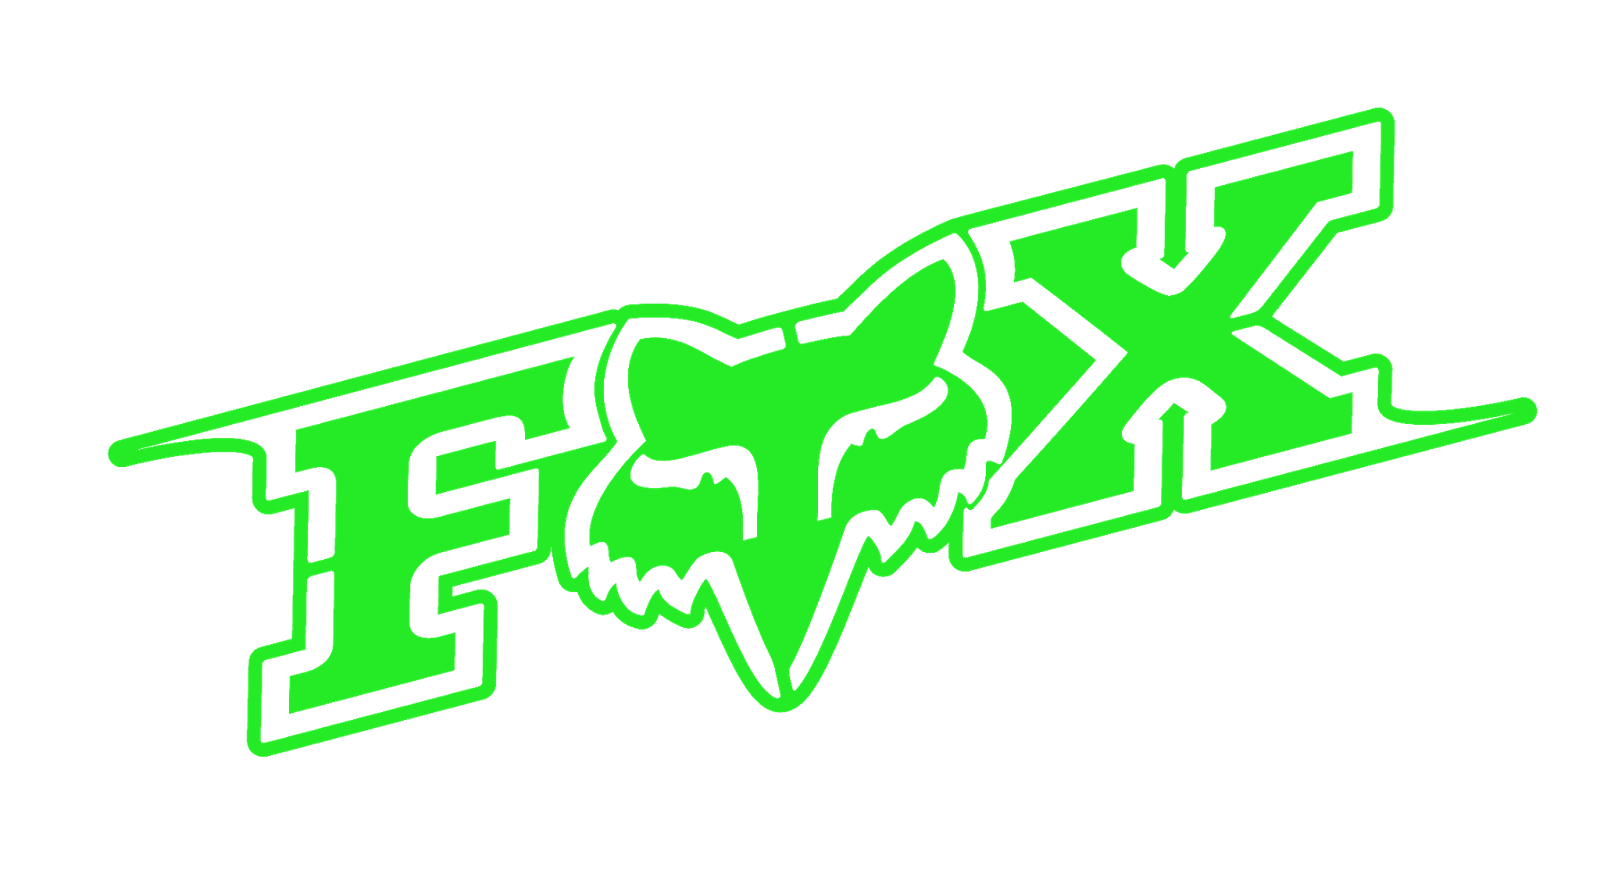 monster energy and fox racing logo wallpaper